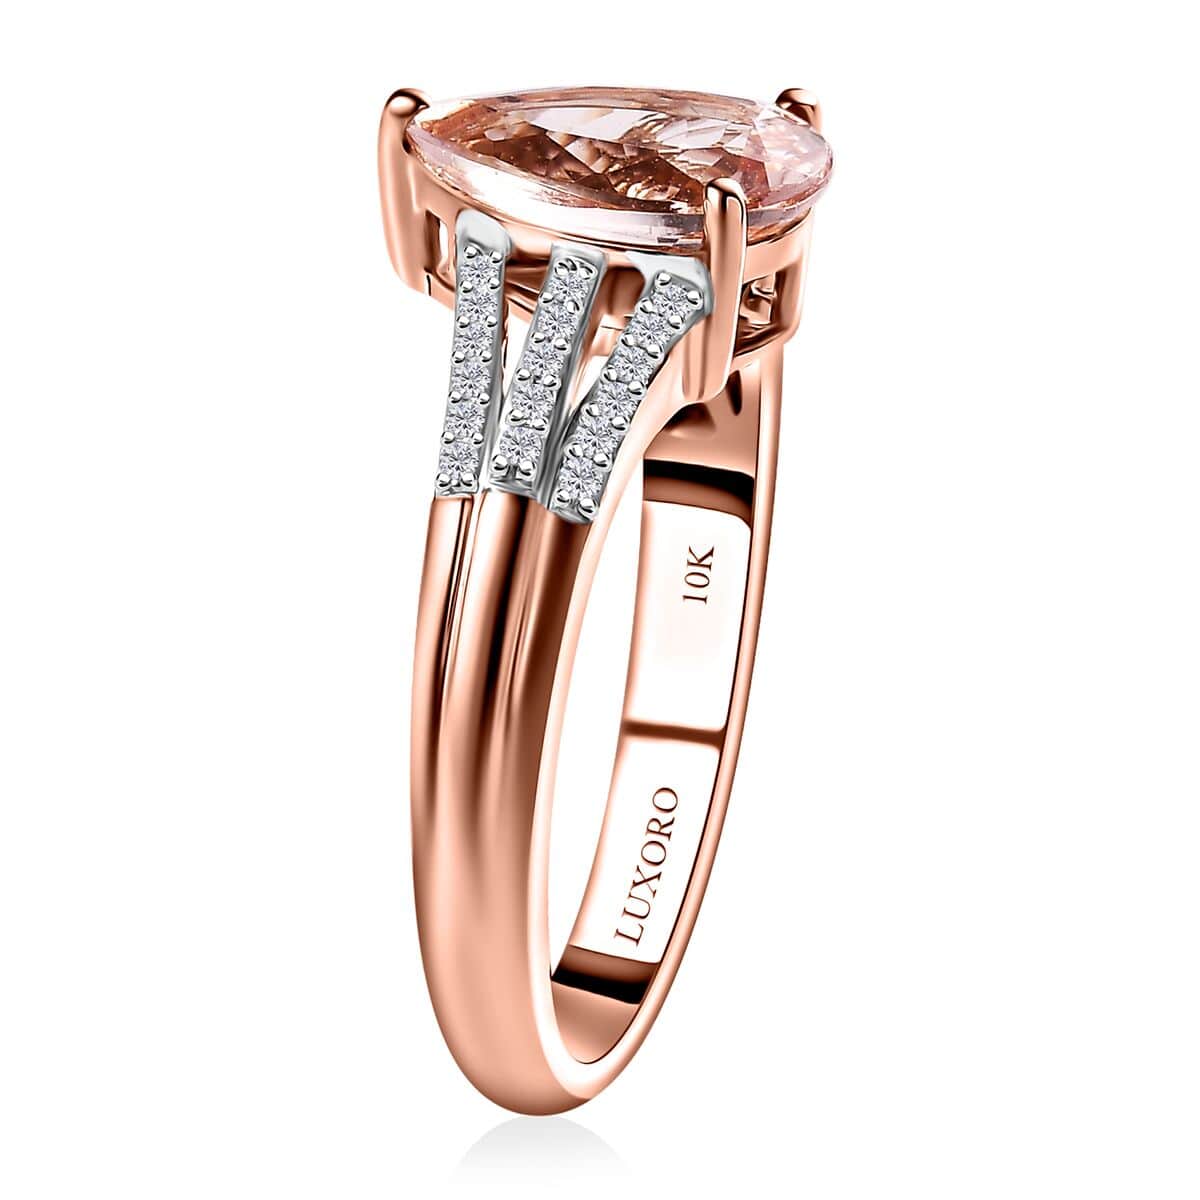 Luxoro 10K Rose Gold Premium Pink Morganite and Diamond Ring (Size 9.0) 1.75 ctw image number 3